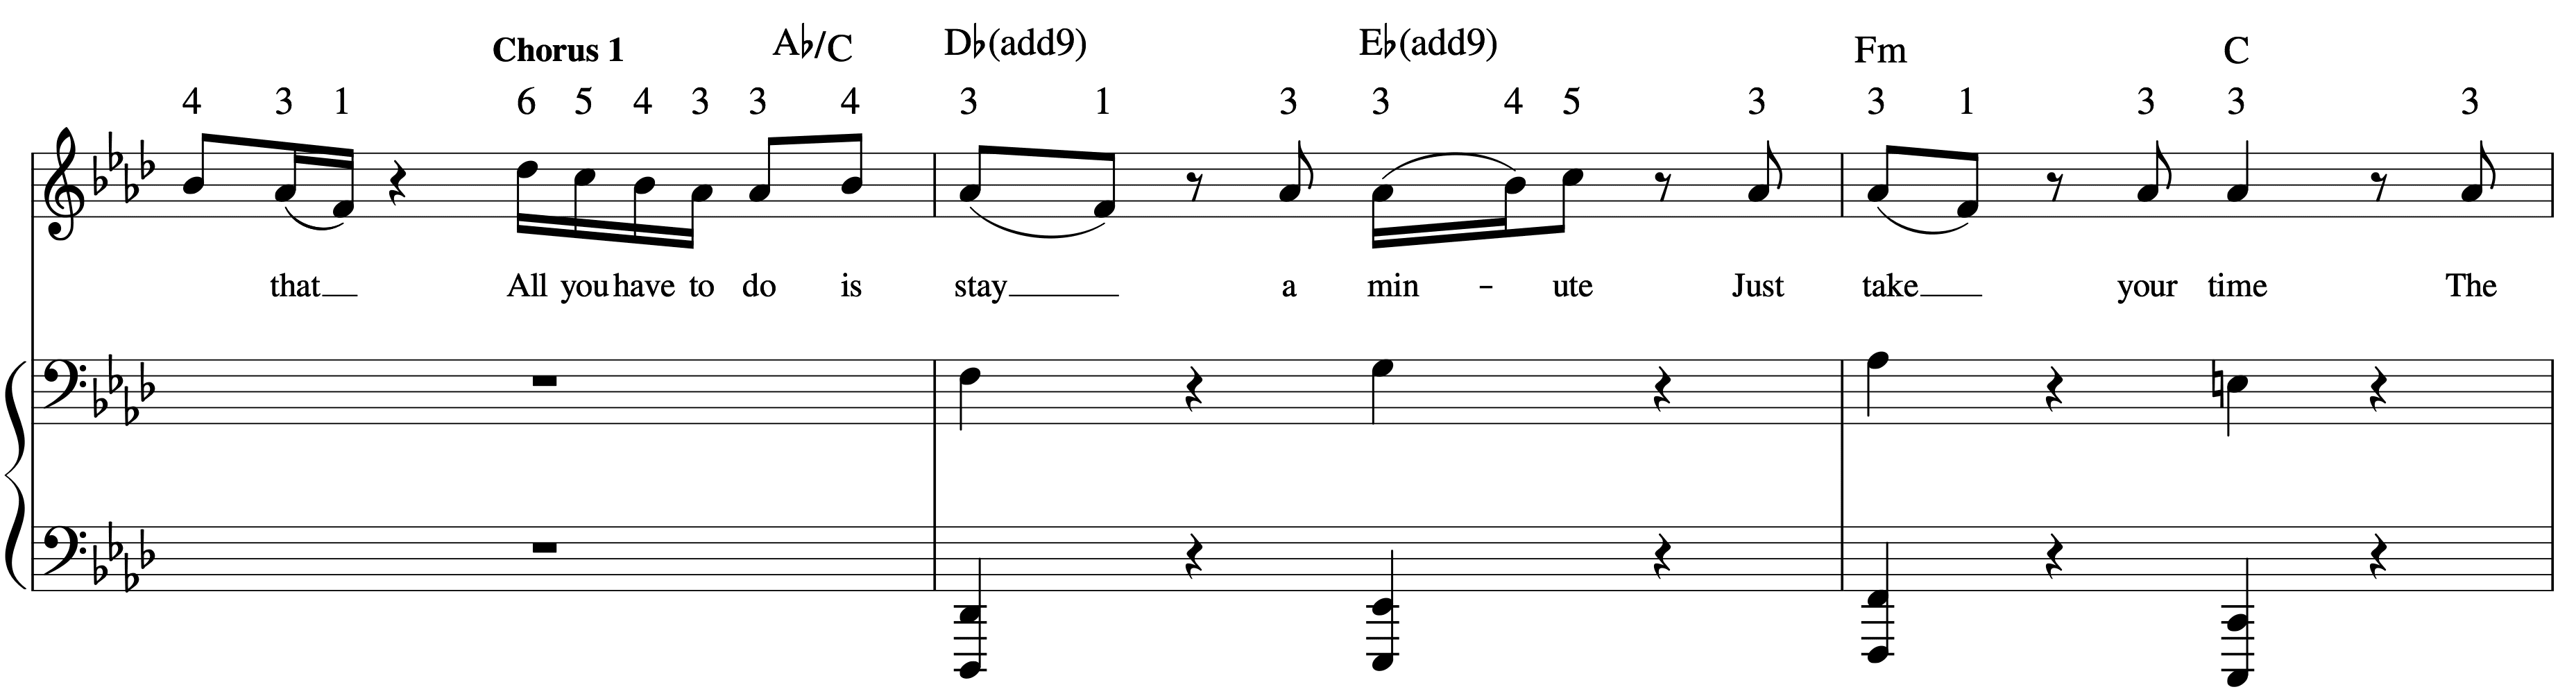 Chorus 1 Pattern